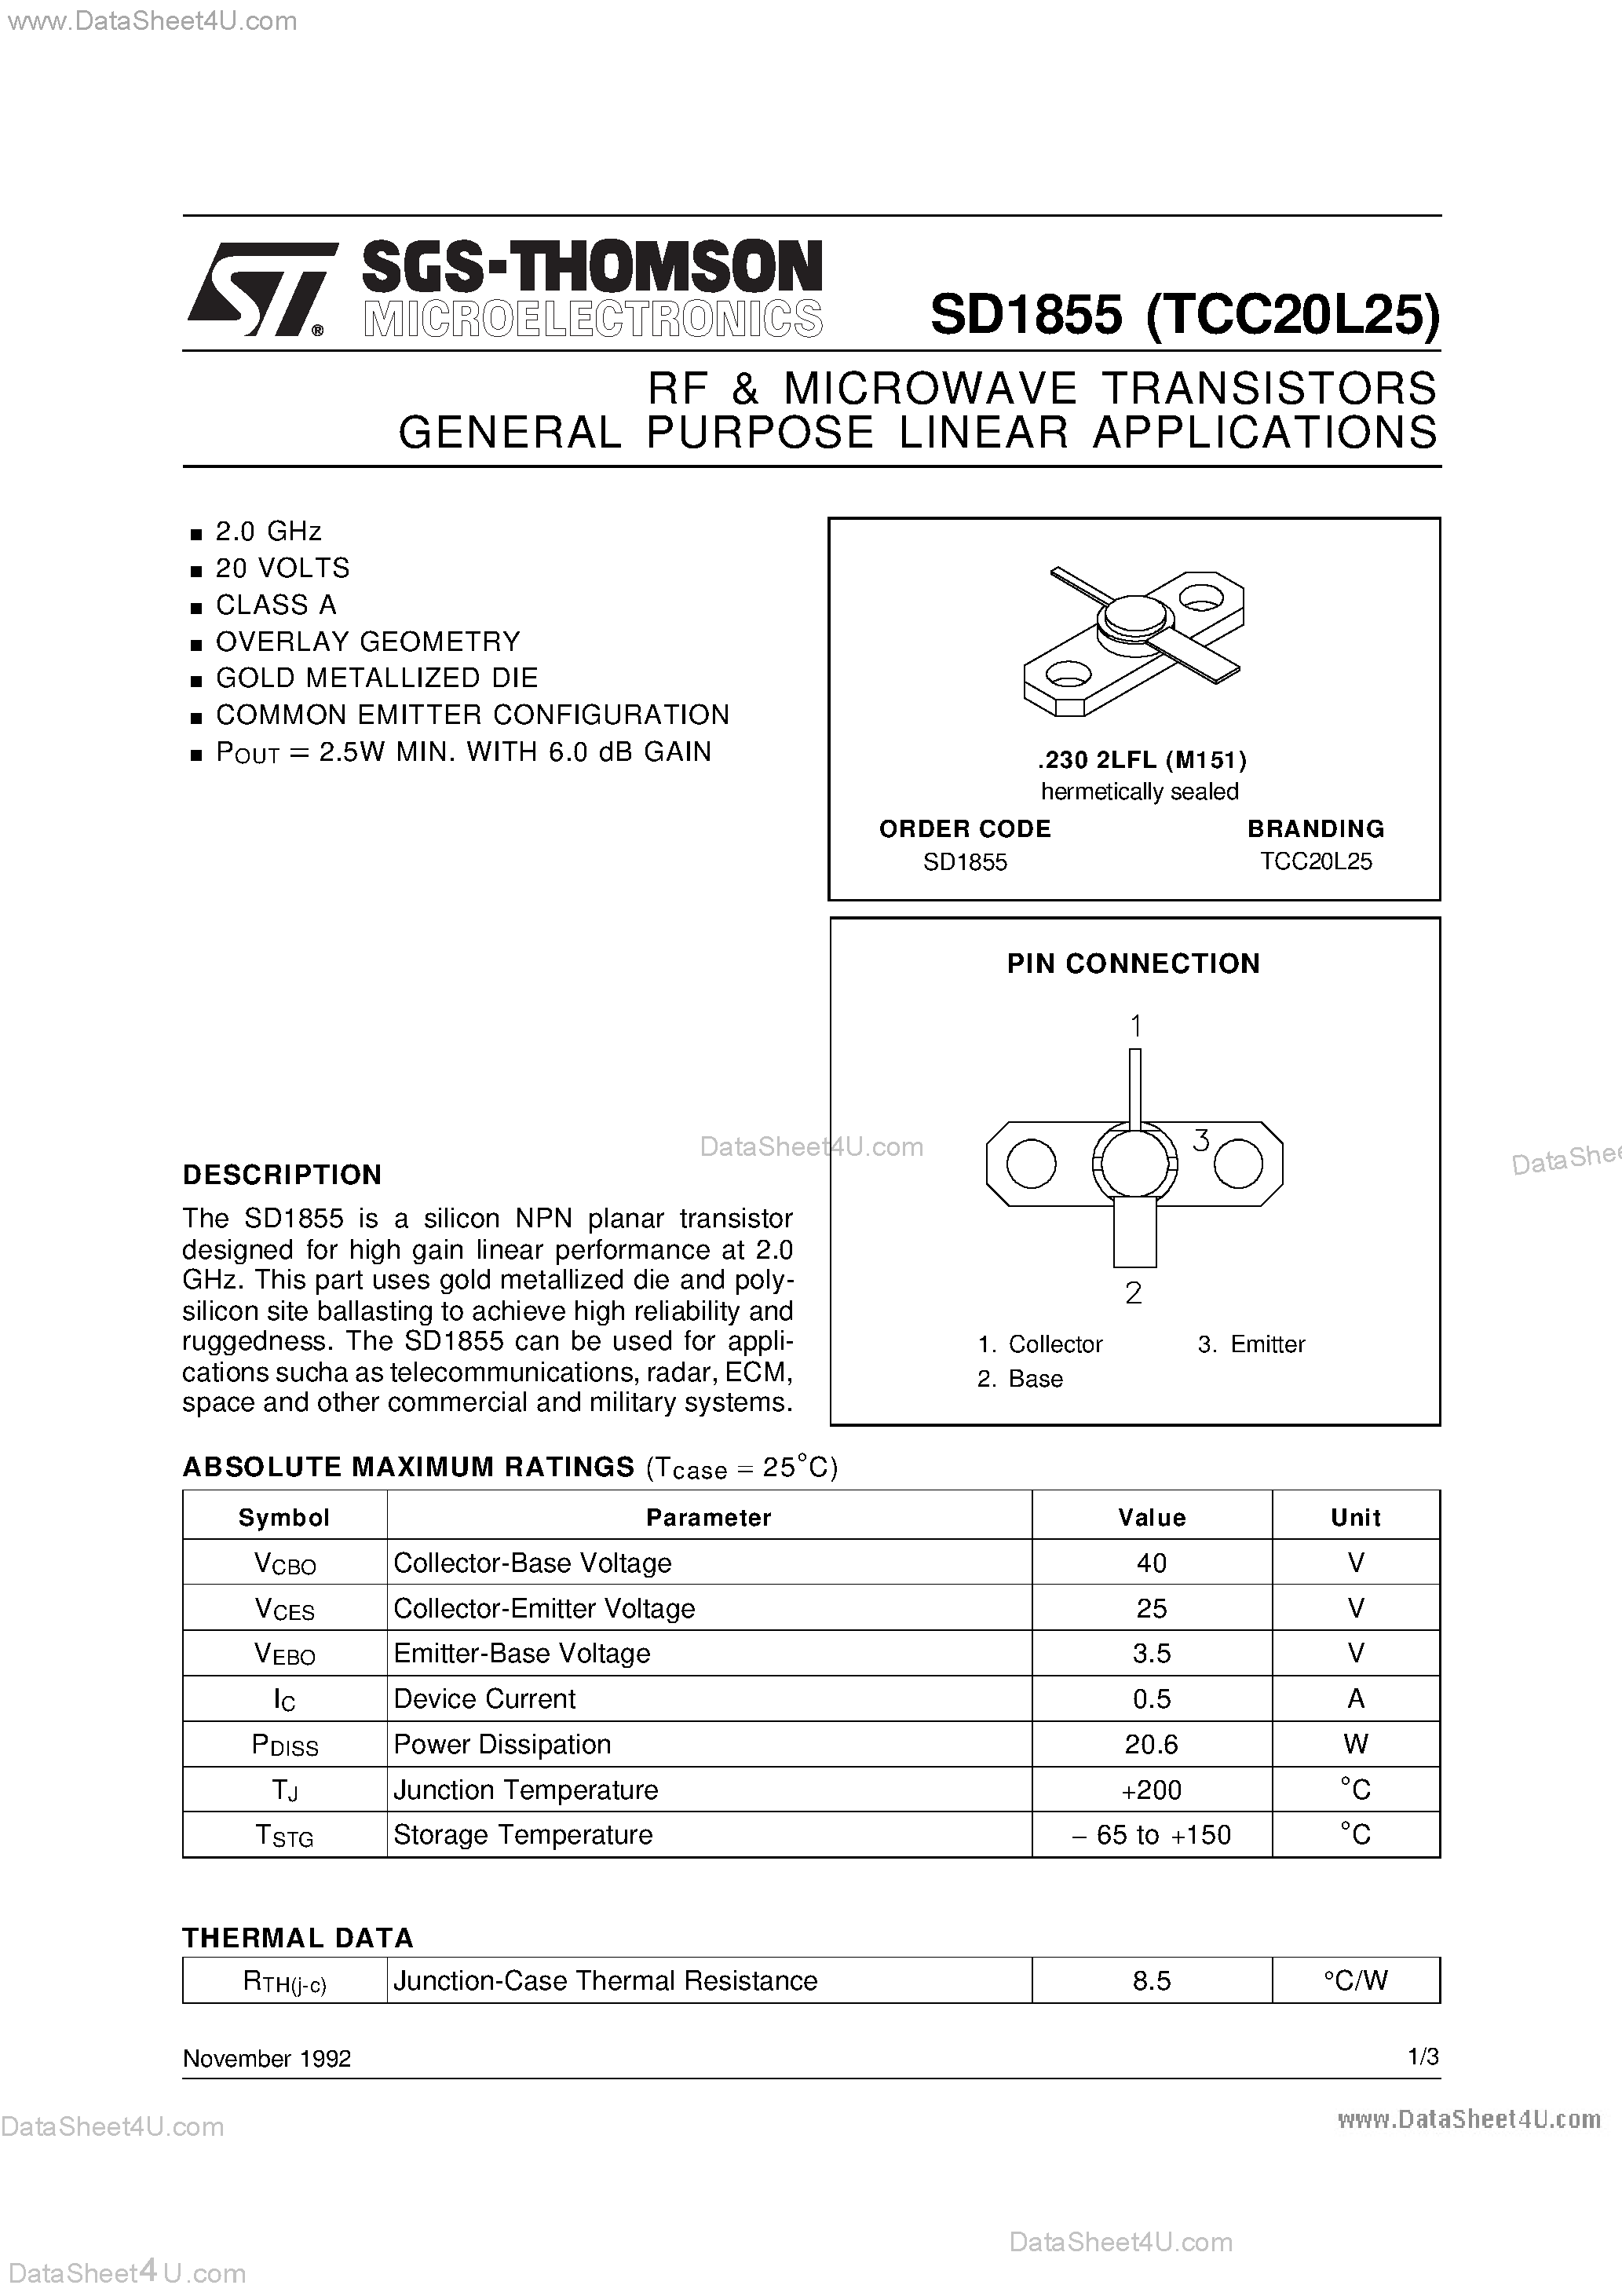 Datasheet SD1855 - RF & MICROWAVE TRANSISTORS GENERAL PURPOSE LINEAR APPLICATIONS page 1